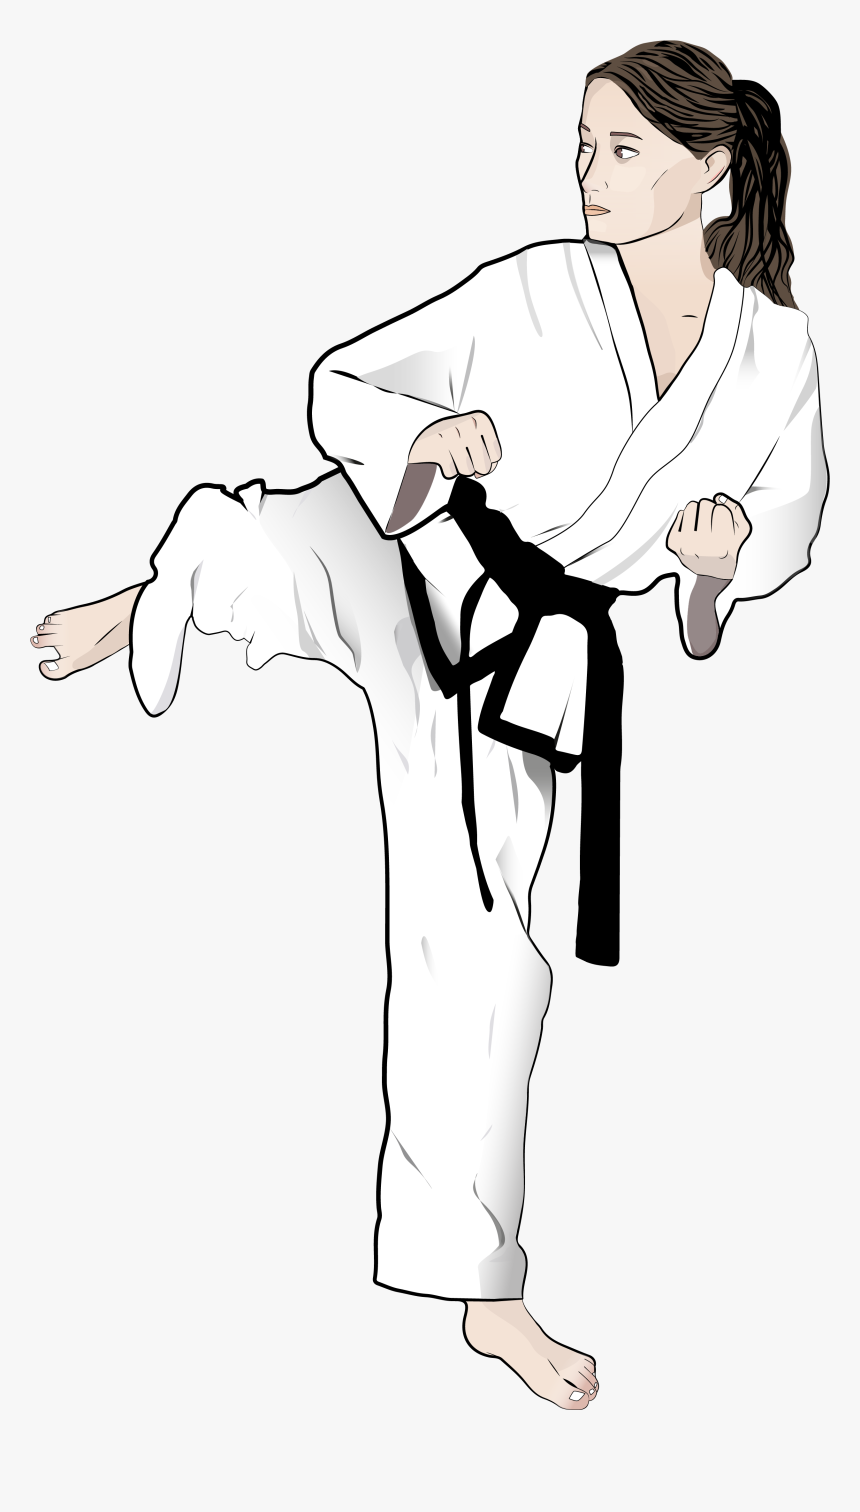 Transparent Karate Silhouette Pn